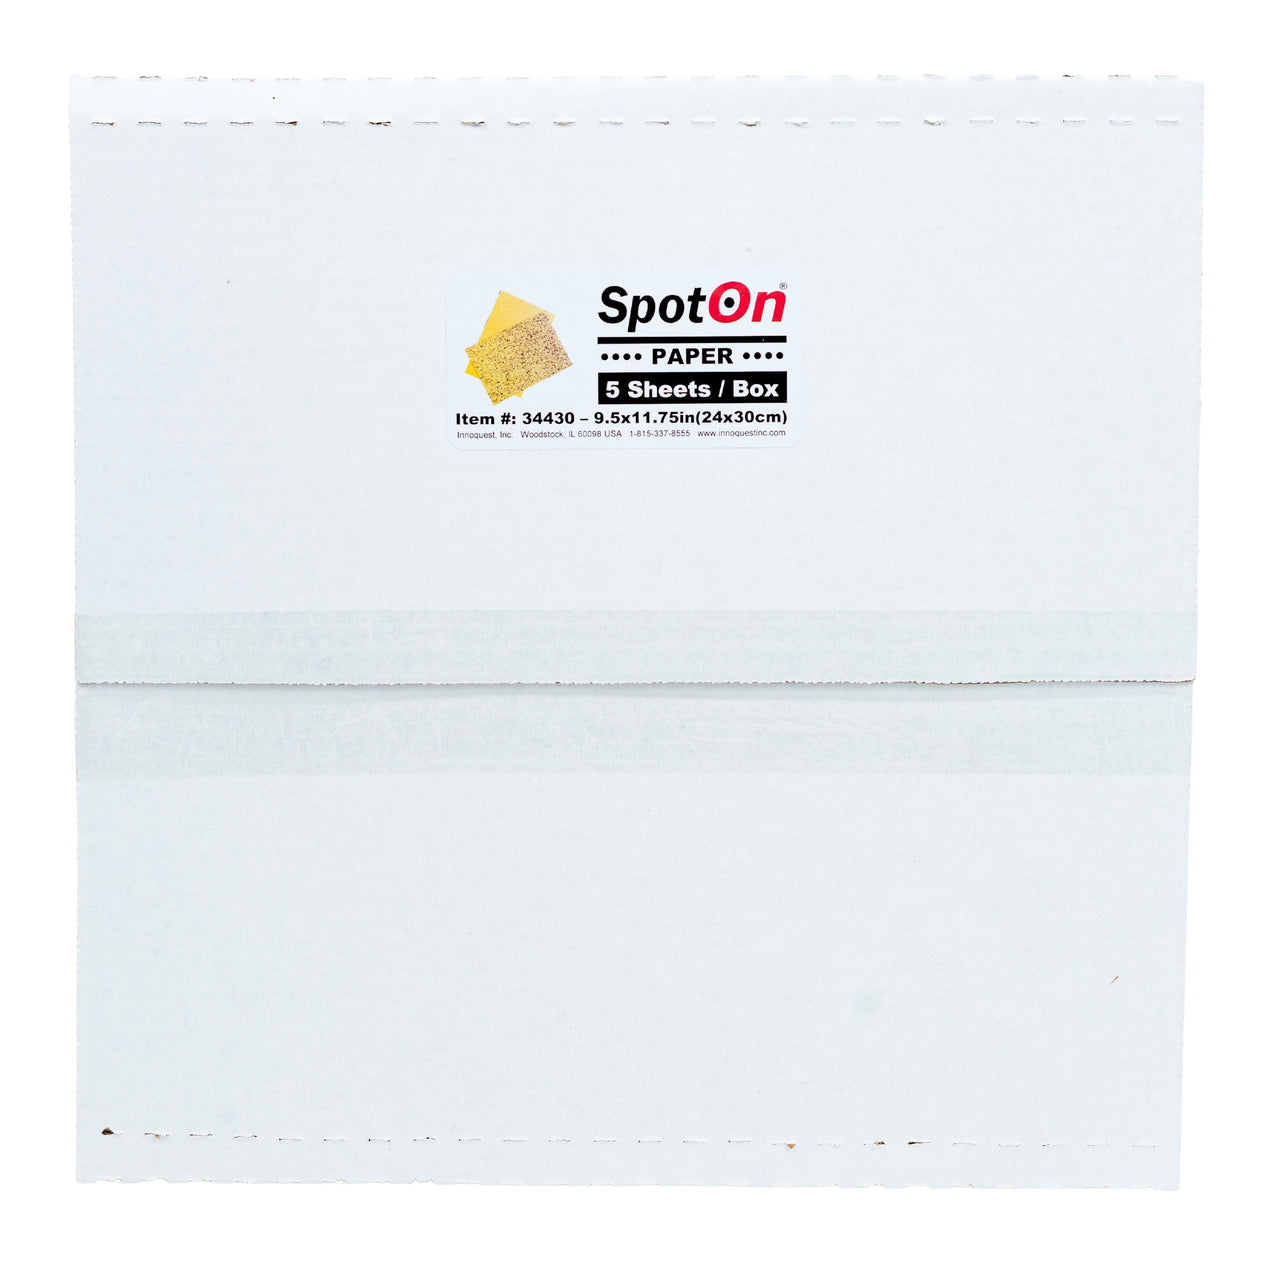 SpotOn 9.75x11.75 Spray Calibration Water Sensitive Paper, 5 Sheets per pack.